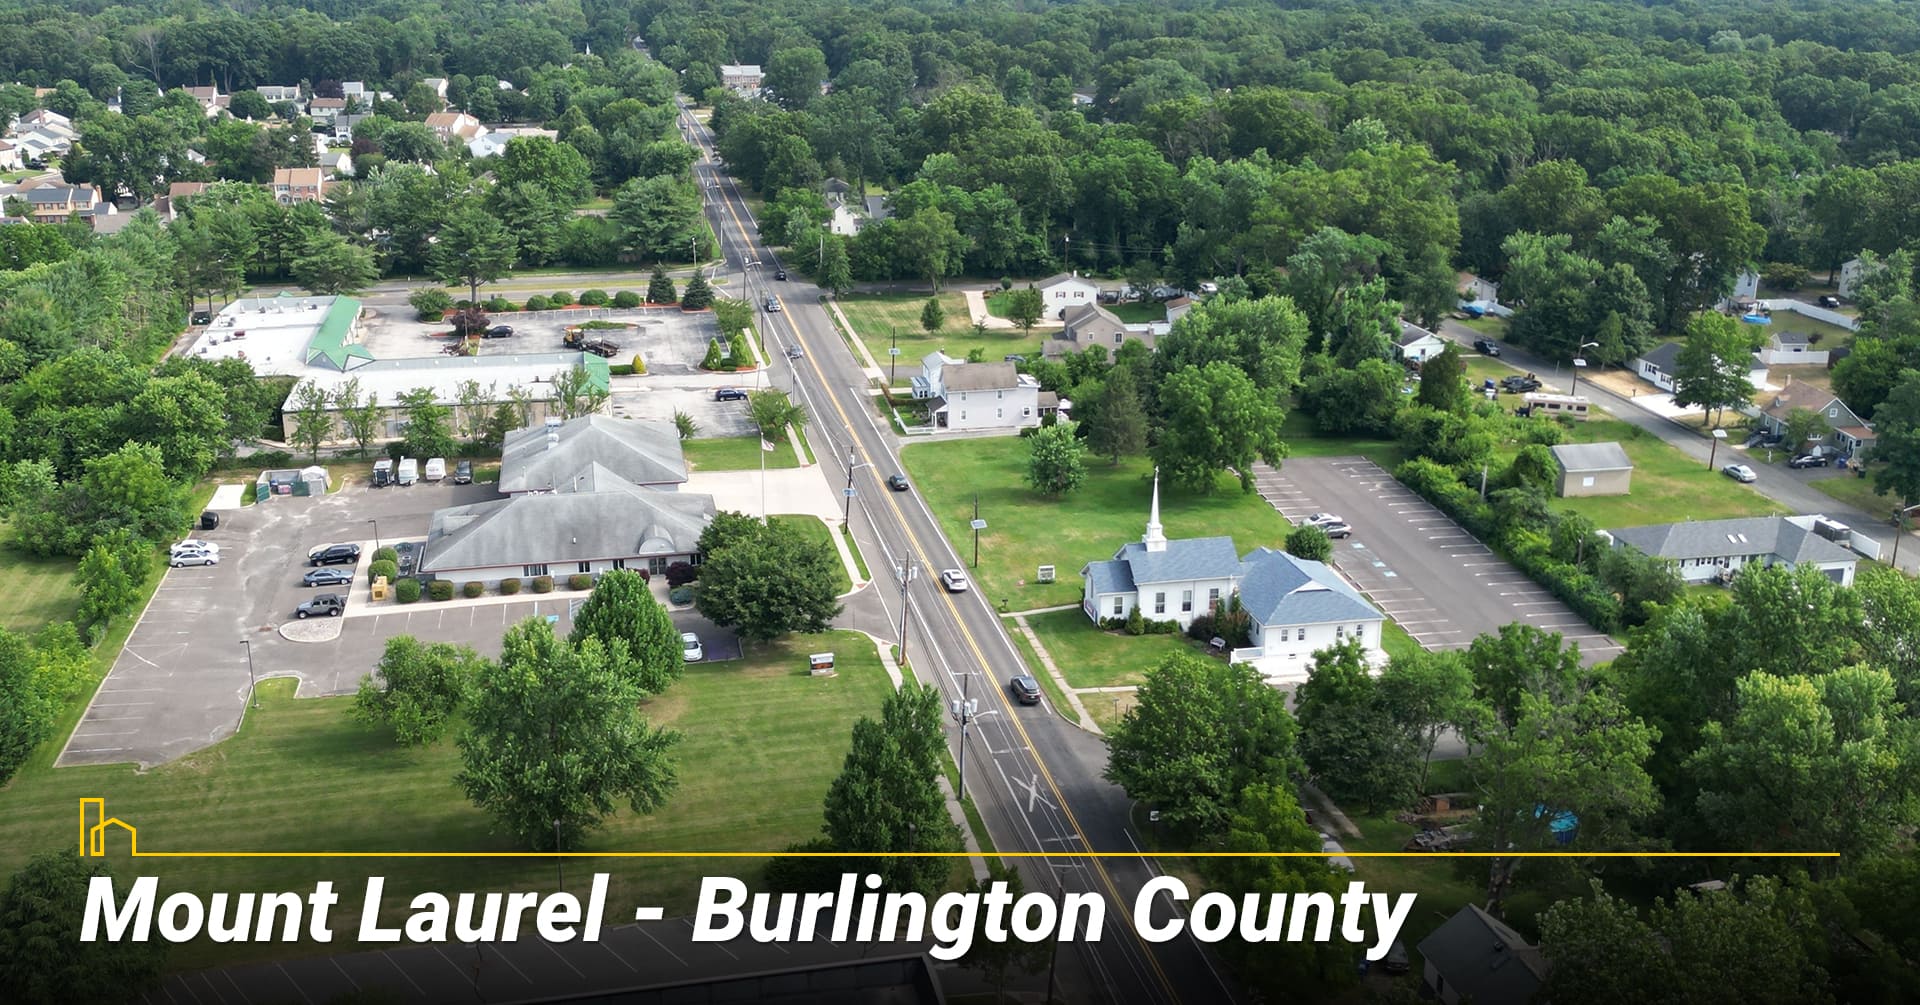 Mount Laurel - Burlington County